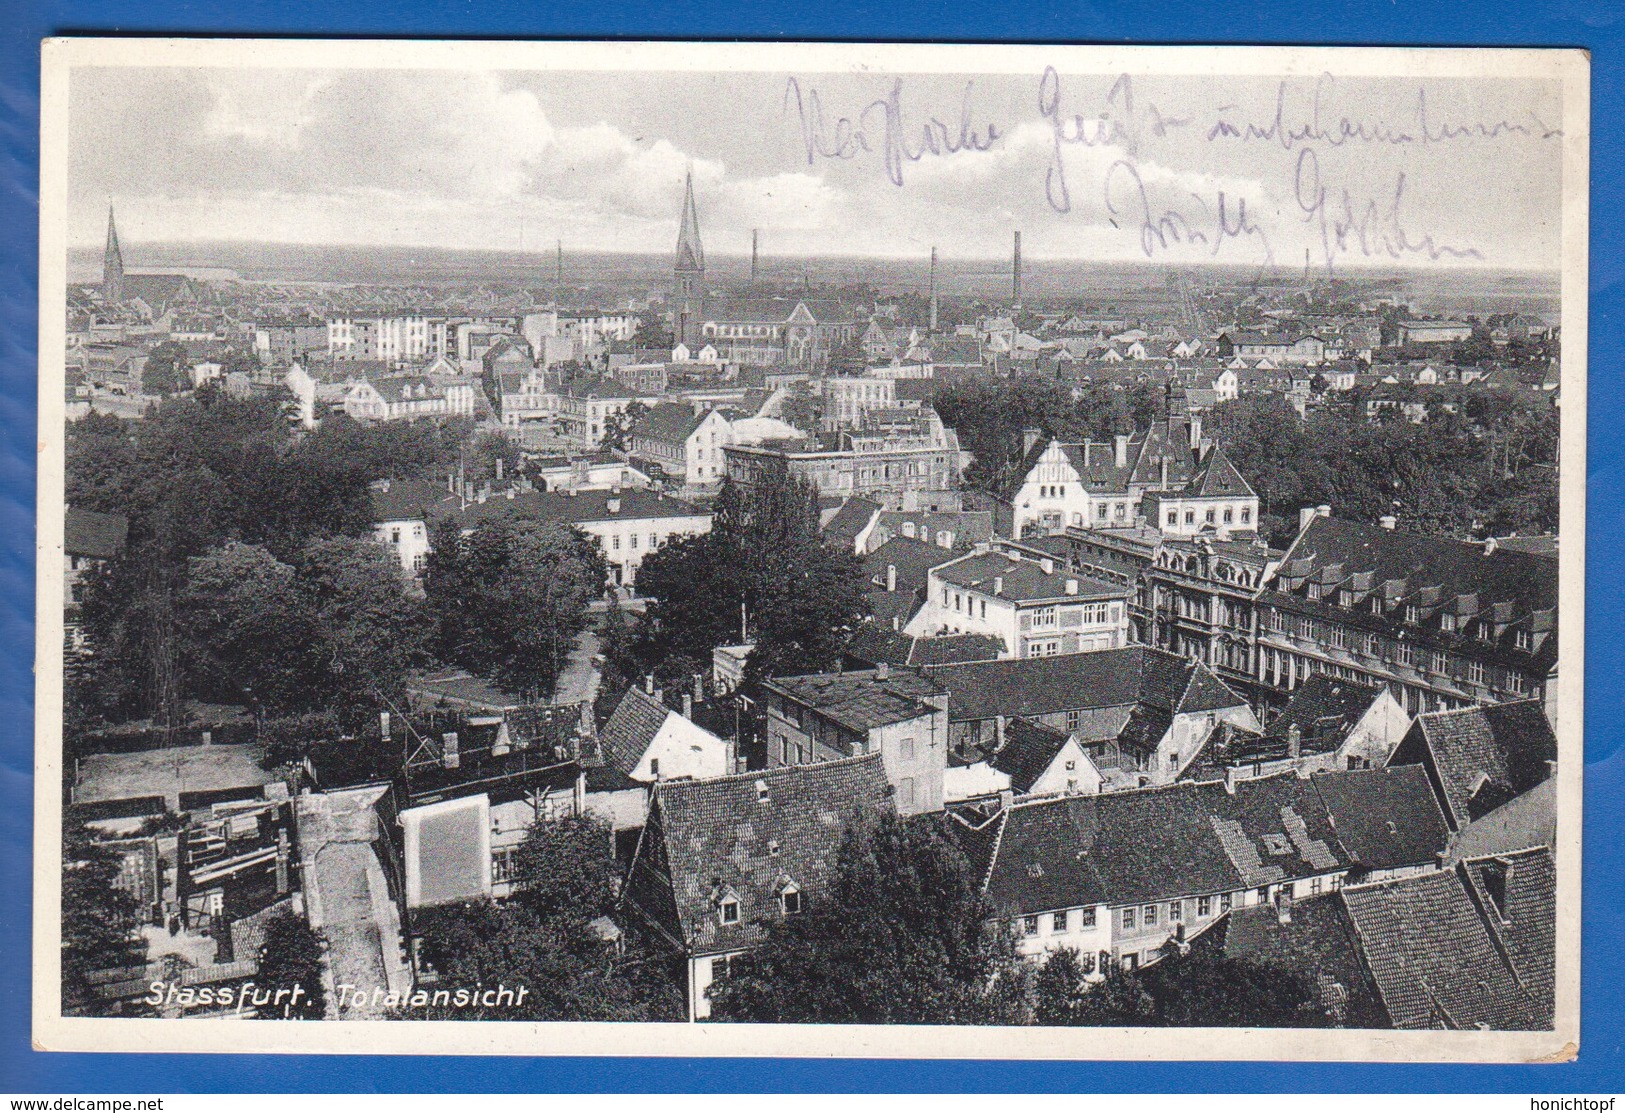 Deutschland; Stassfurt; Panorama; 1933 - Stassfurt